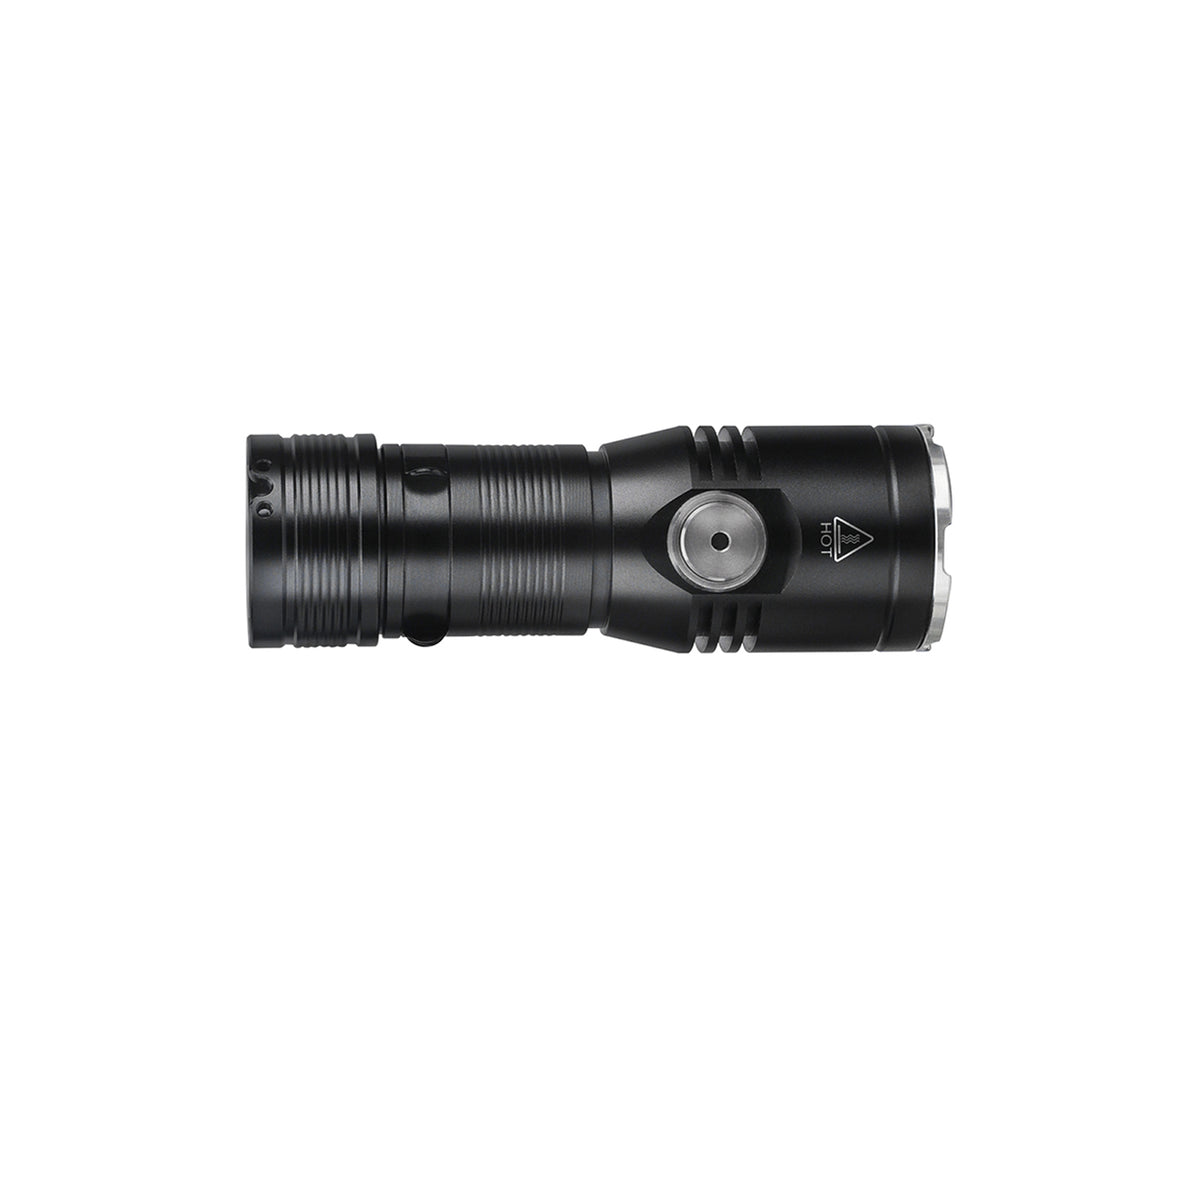 UltraFire Rechargeable Small Tactical Flashlight, 2050 Lumen High Power LED Pocket Flashlight